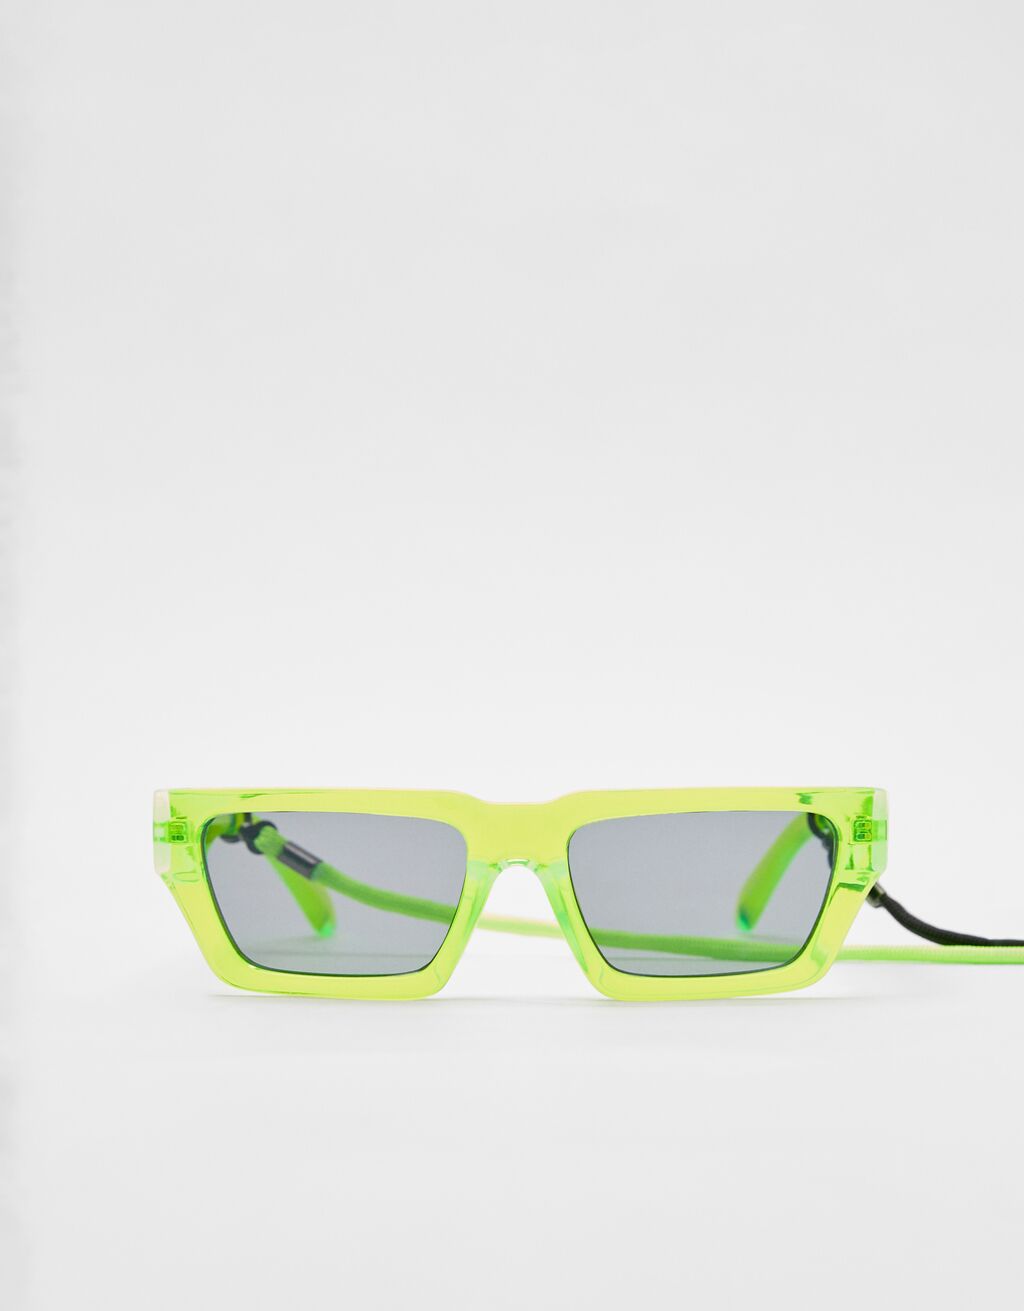 Neon sunglasses